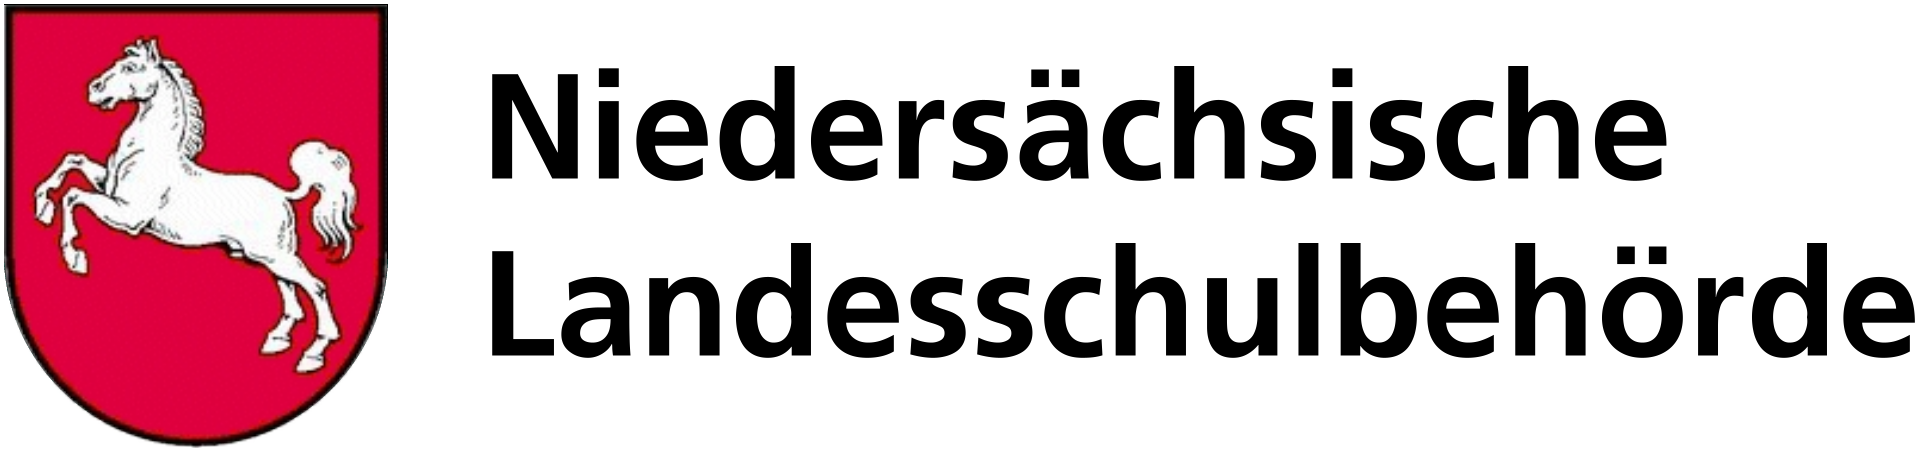 lschb logo1